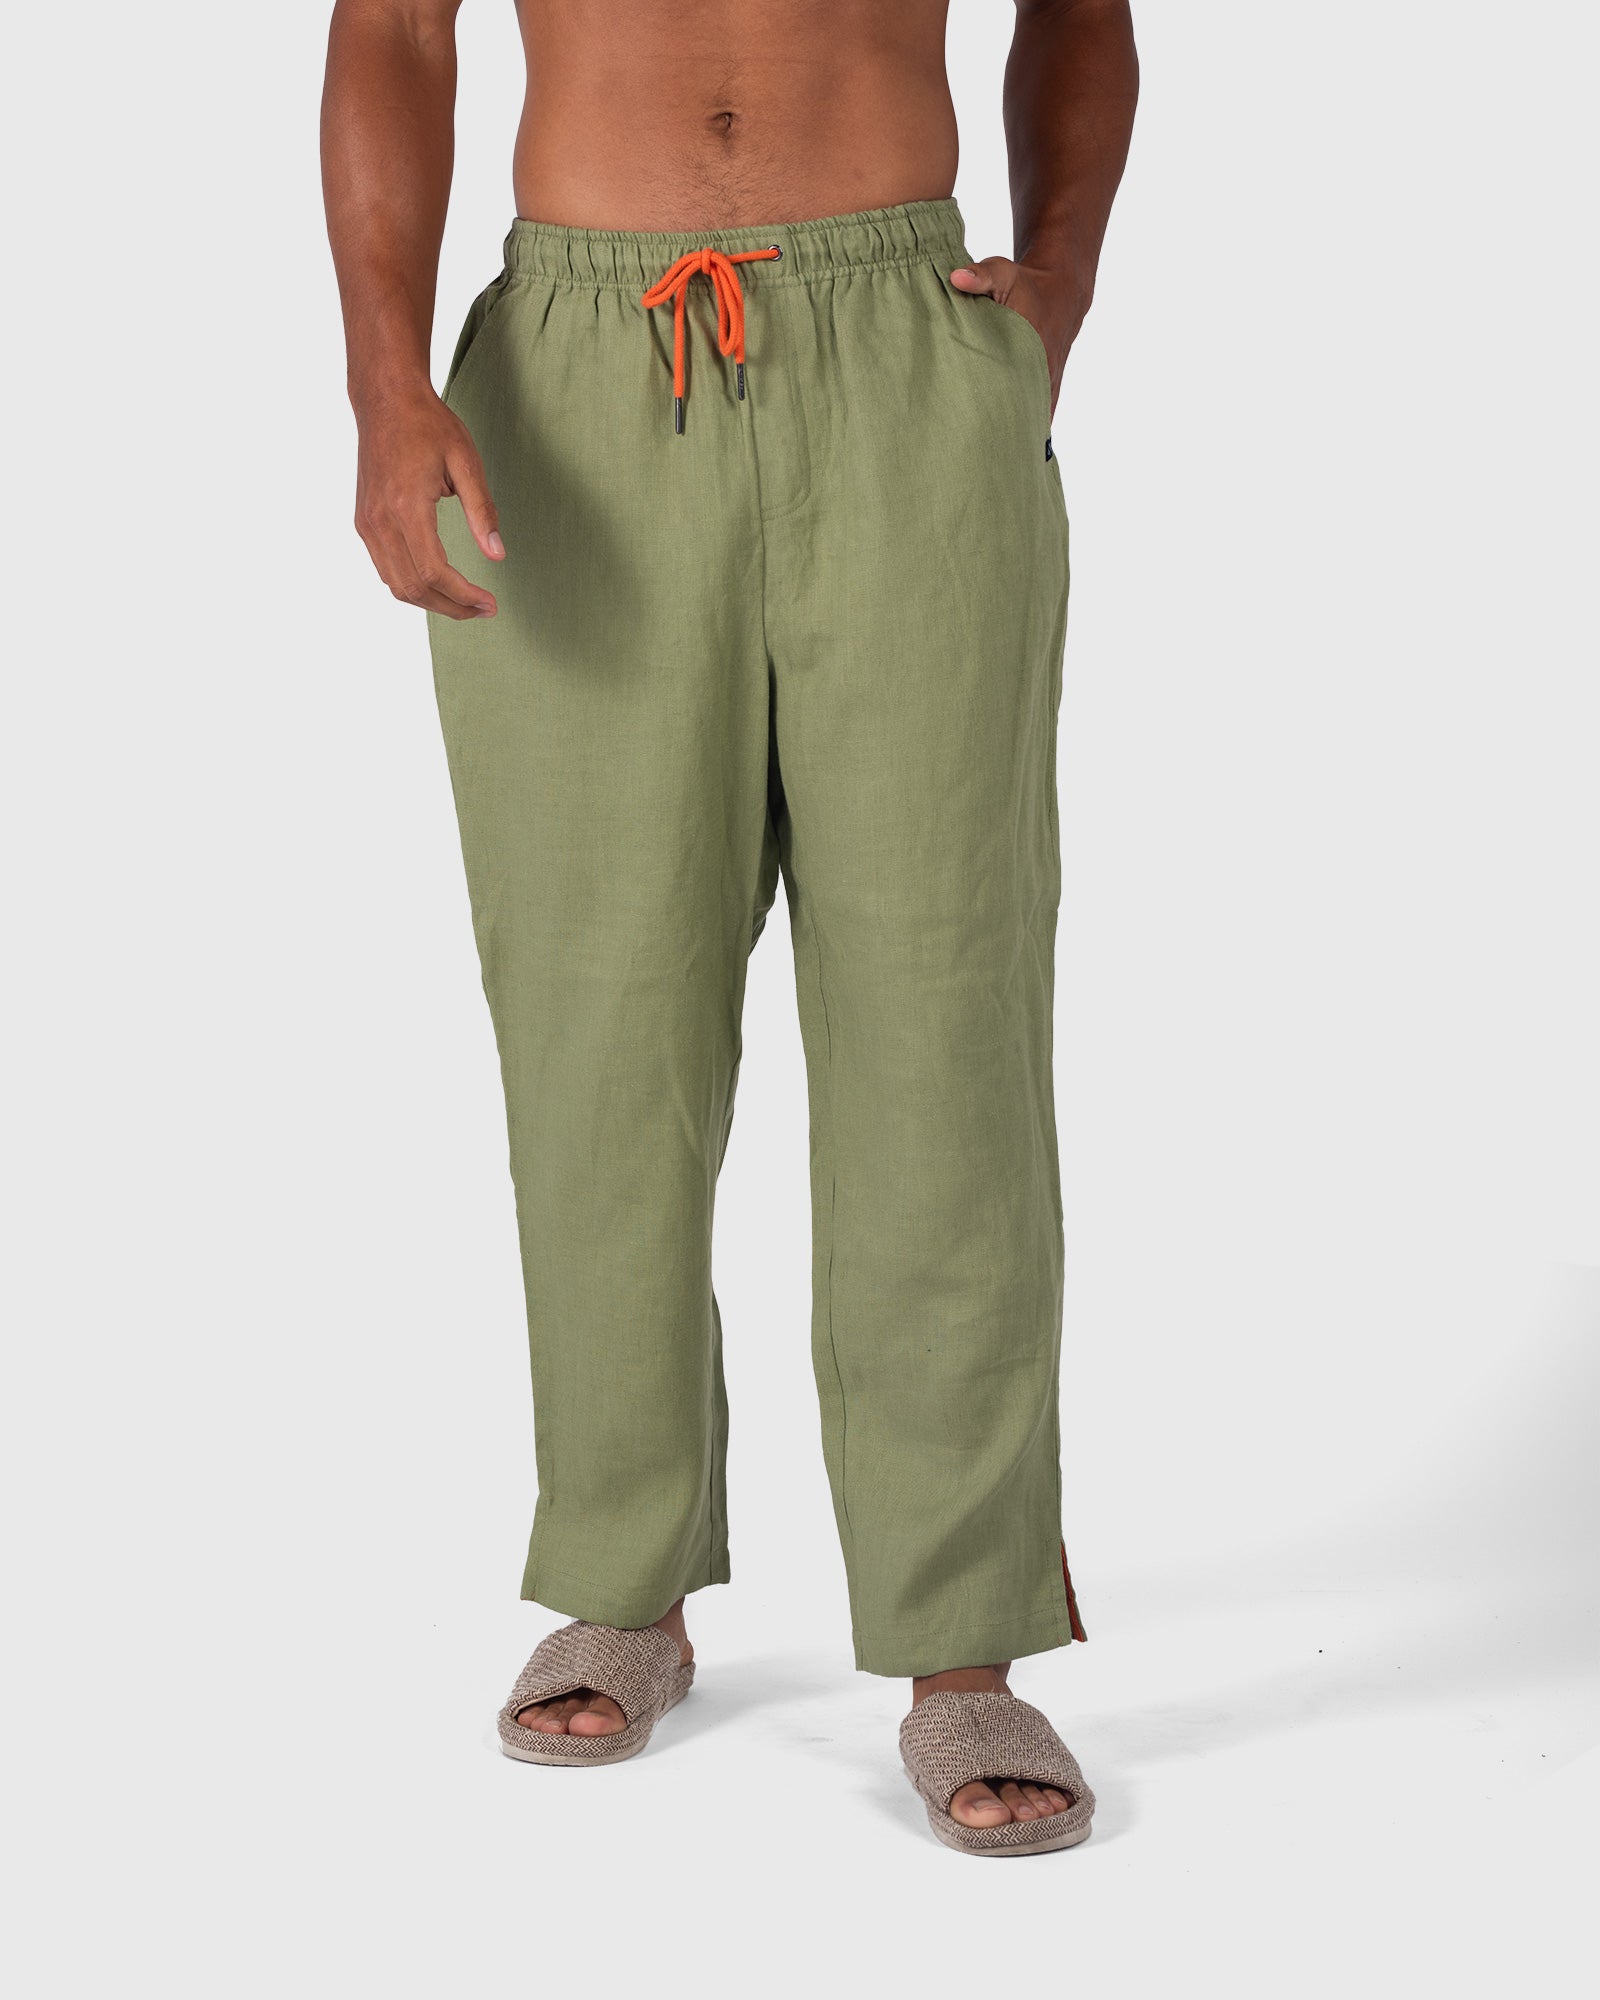 Men's Linen Pants Casual Elastic Waist Drawstring Yoga Beach Trousers -  China Wholesale Men's Linen Pants $4.9 from Yiwu Youchen Garments Co. Ltd |  Globalsources.com